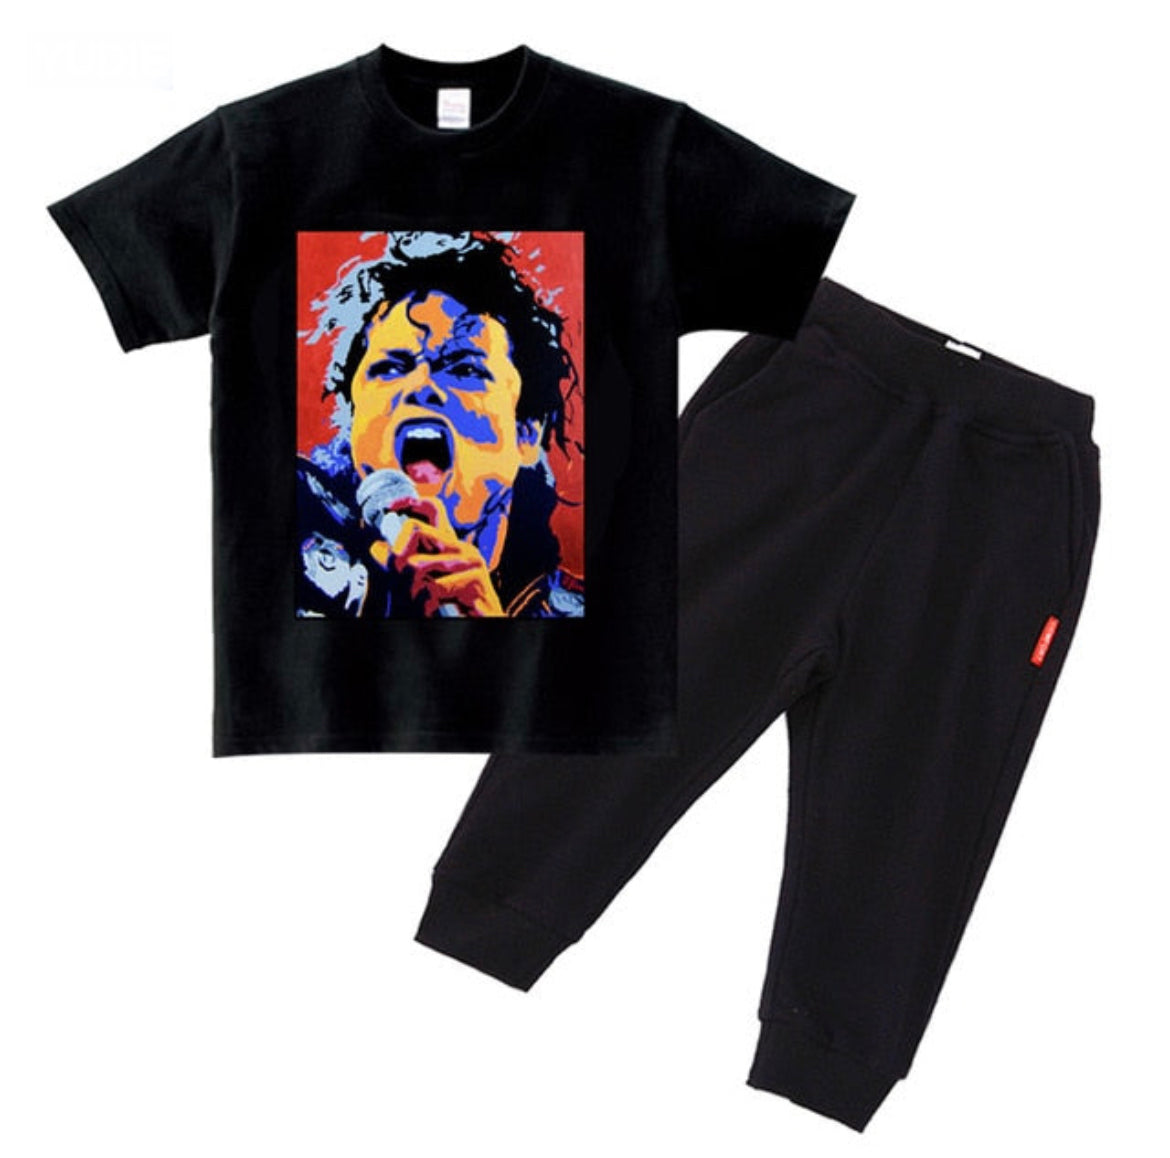 Michael Jackson  - Toddler Tracksuit Clothing Set, Color -Black on Black